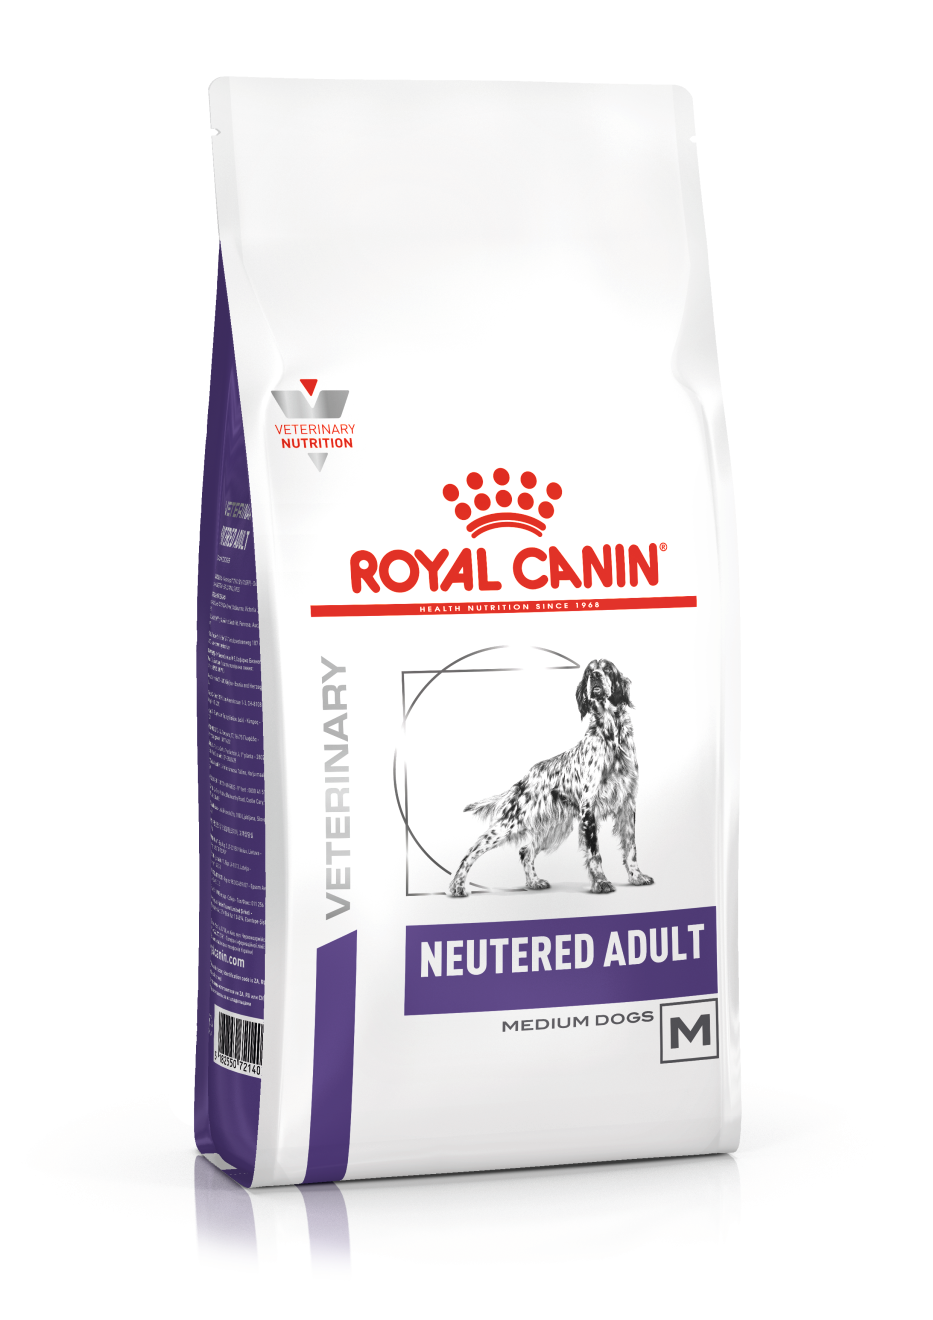 Royal Canin neutered medium dog Adult  ________  1 x 3.5 kg